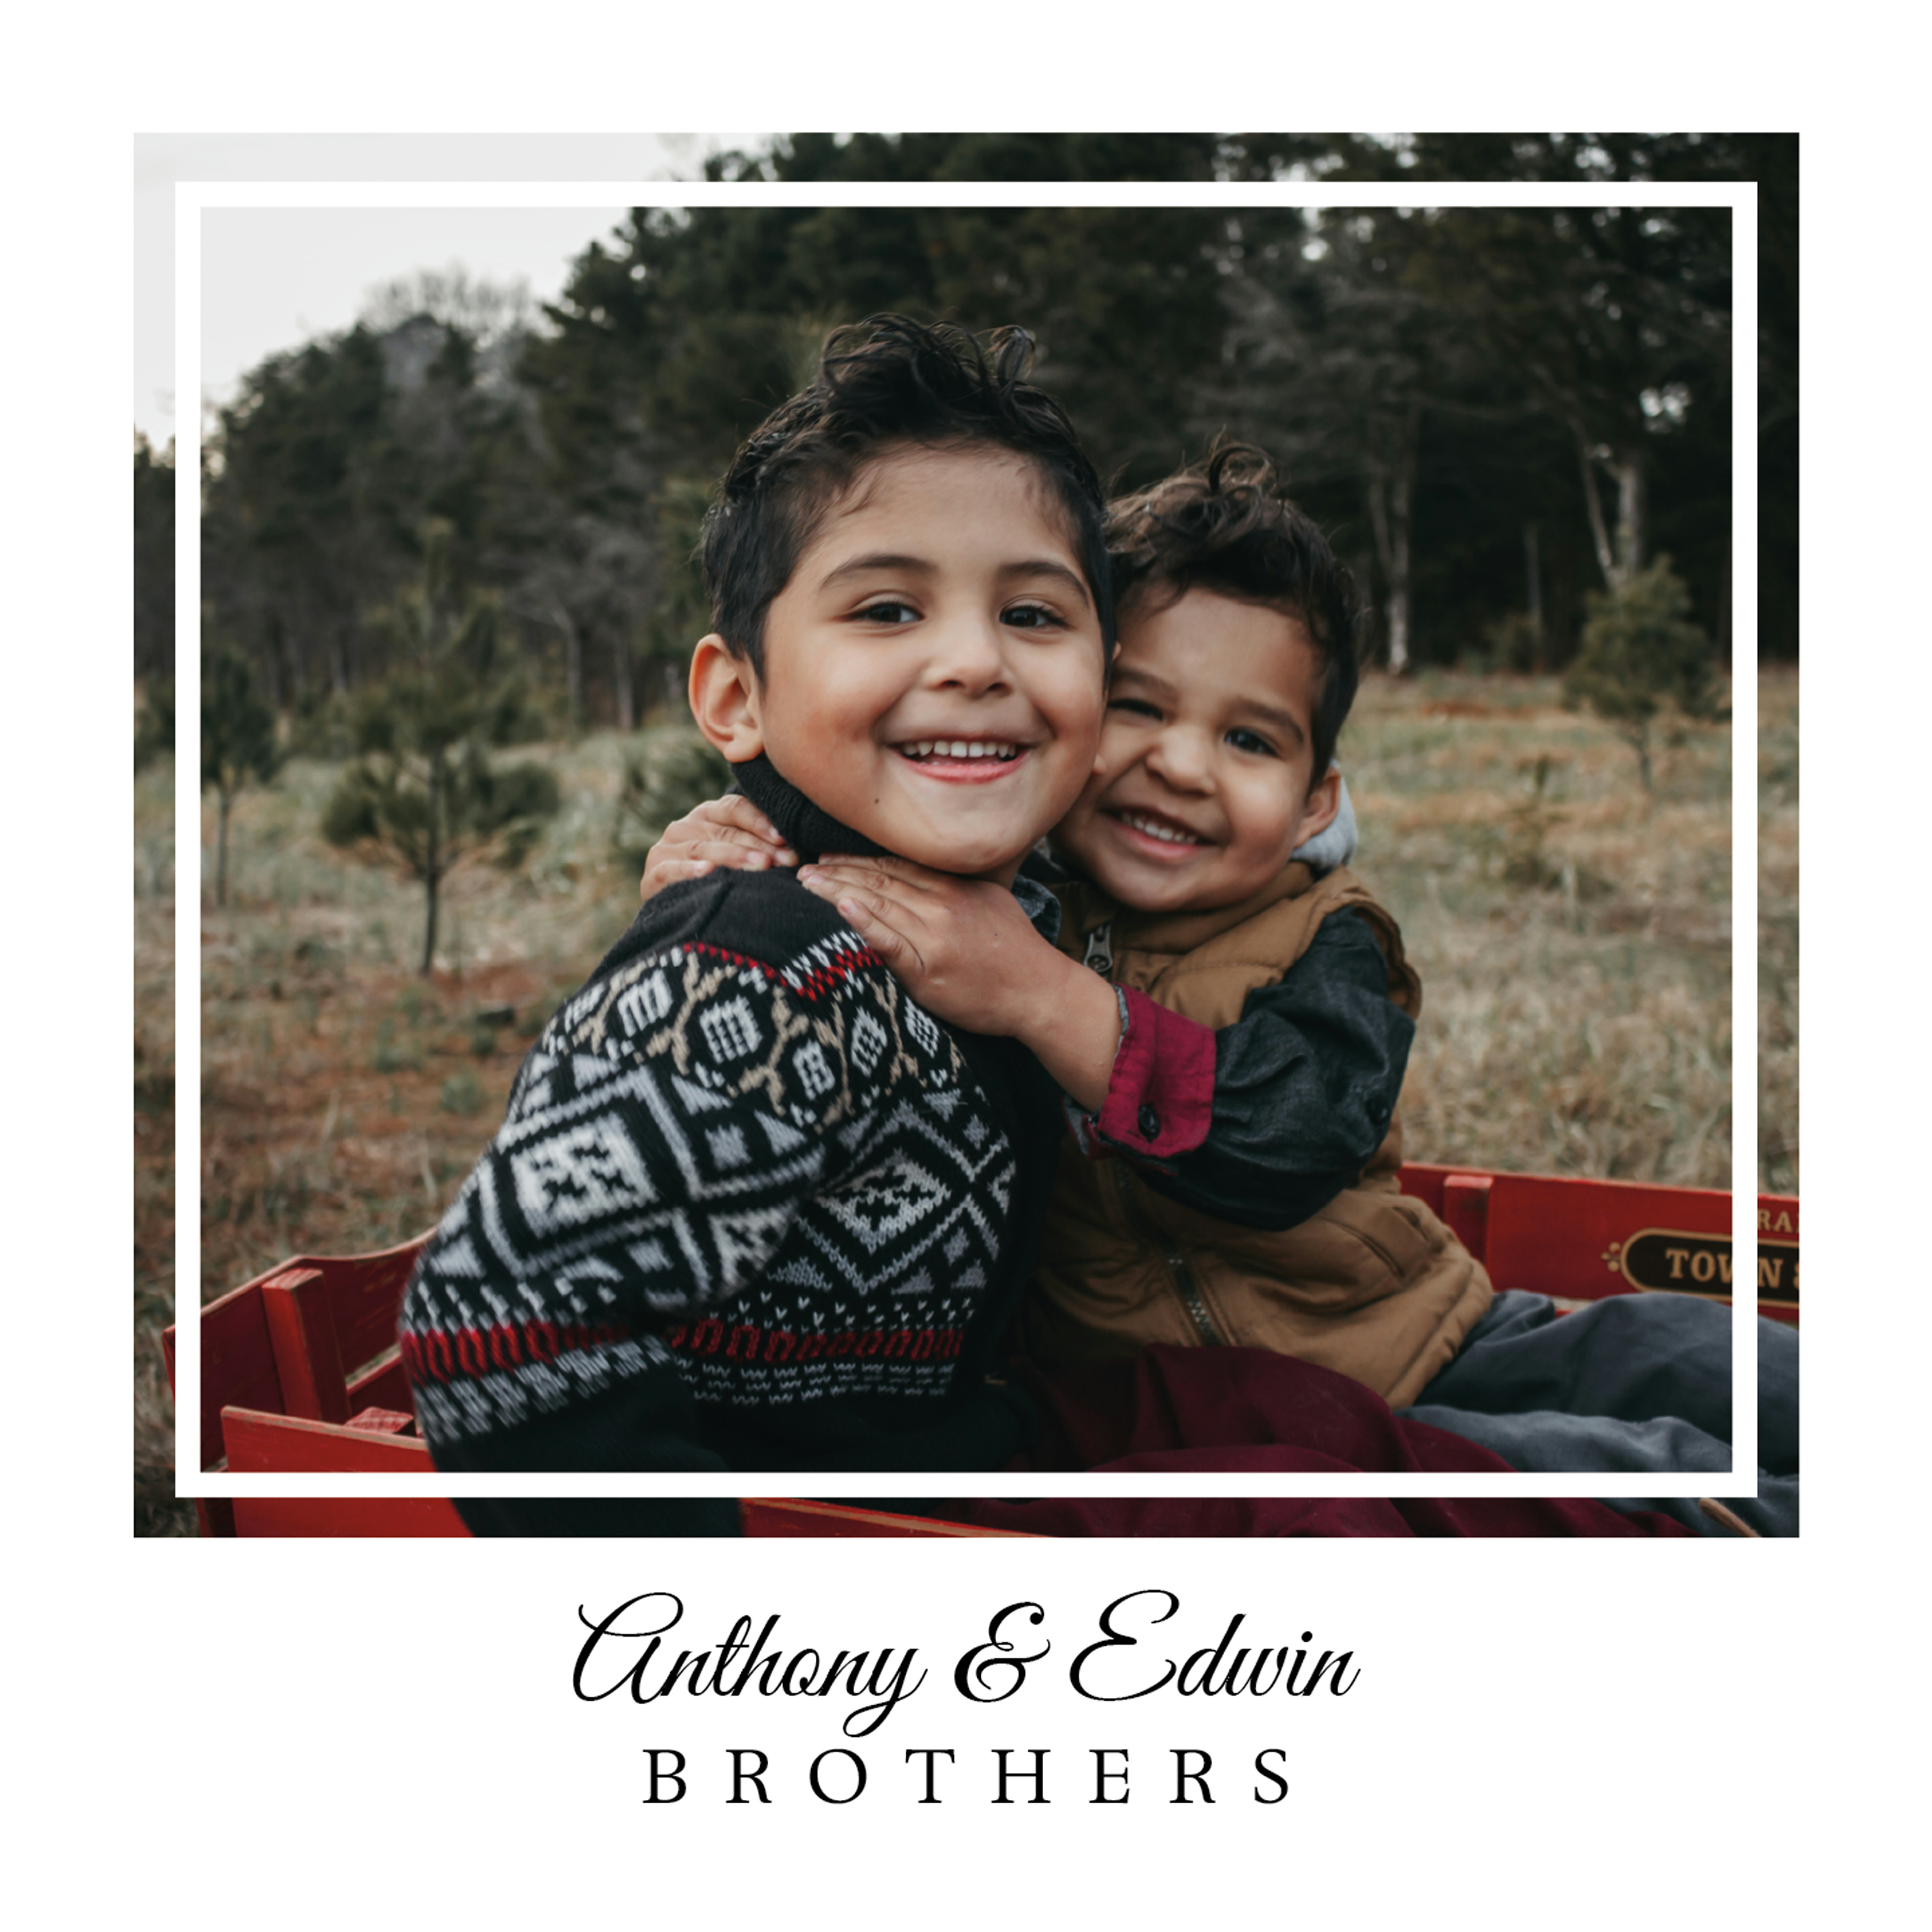 brothers-photo-upload-design-theme